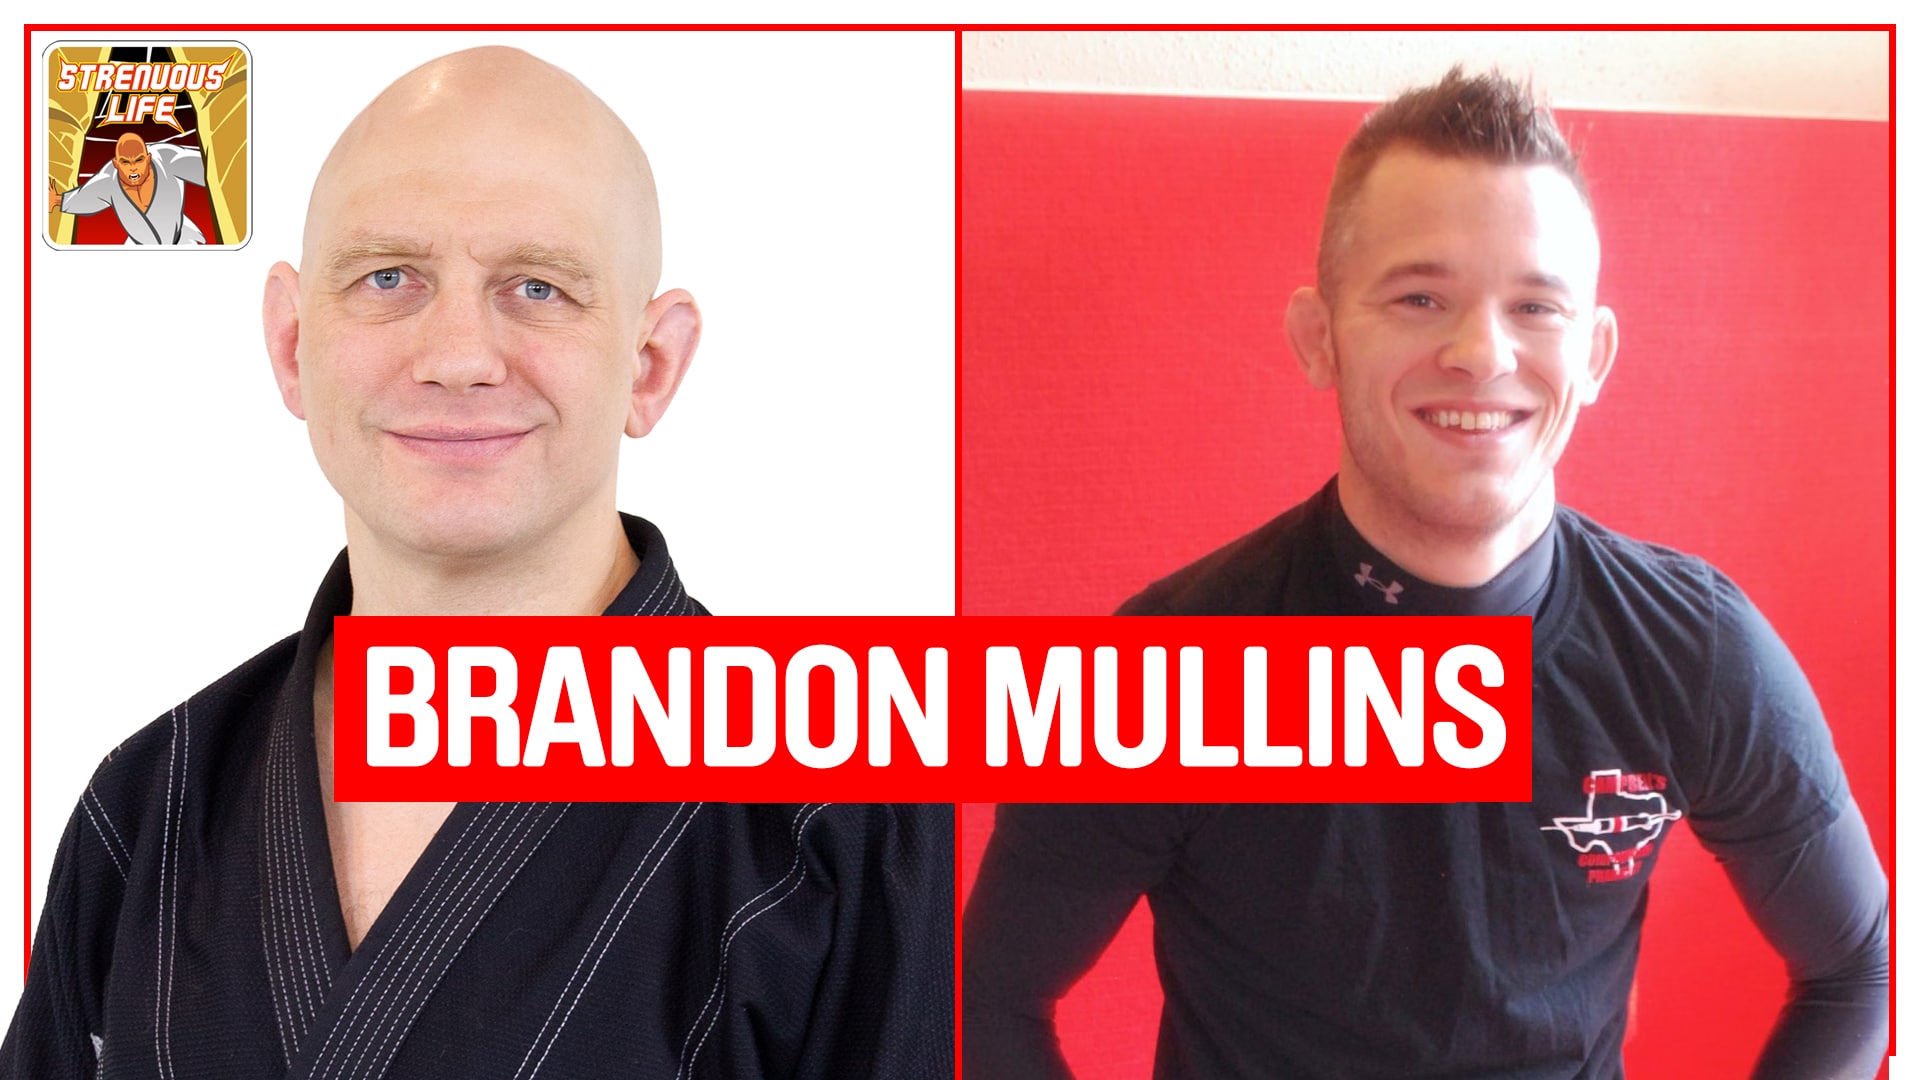 Brandon Mullins on Efficient Training for BJJ Competition